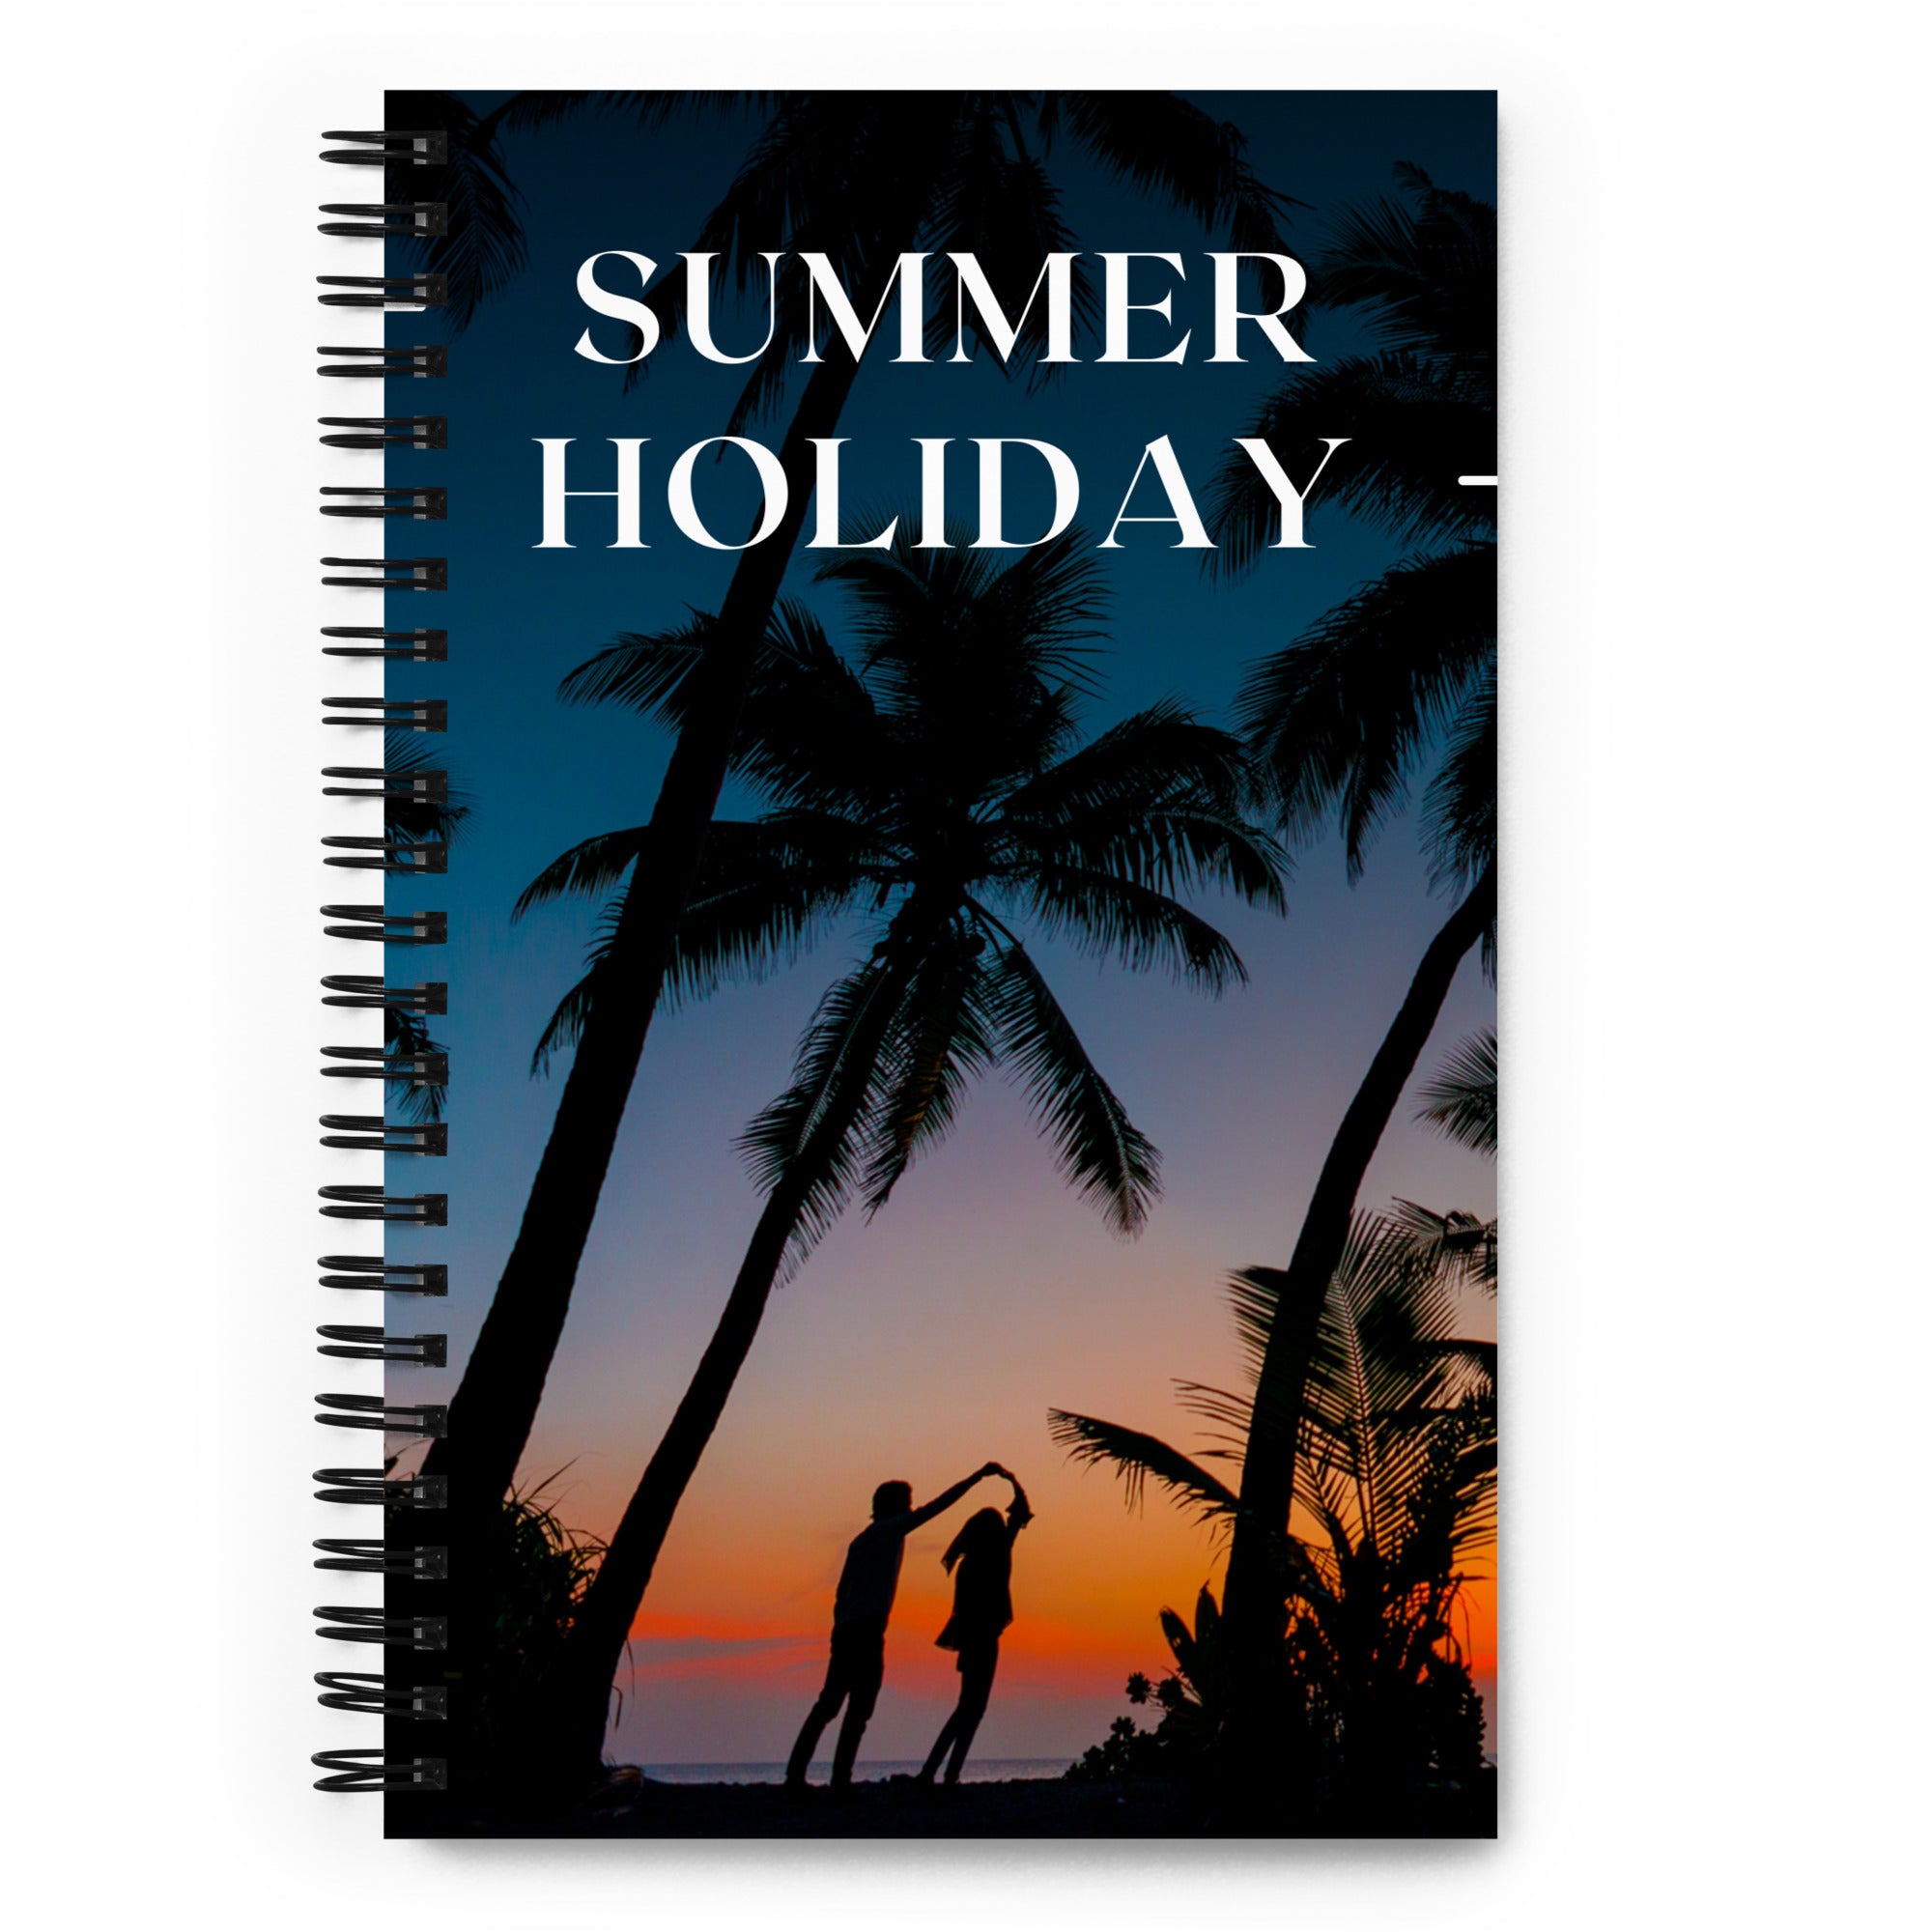 Summer Holiday - Spiral Notebook